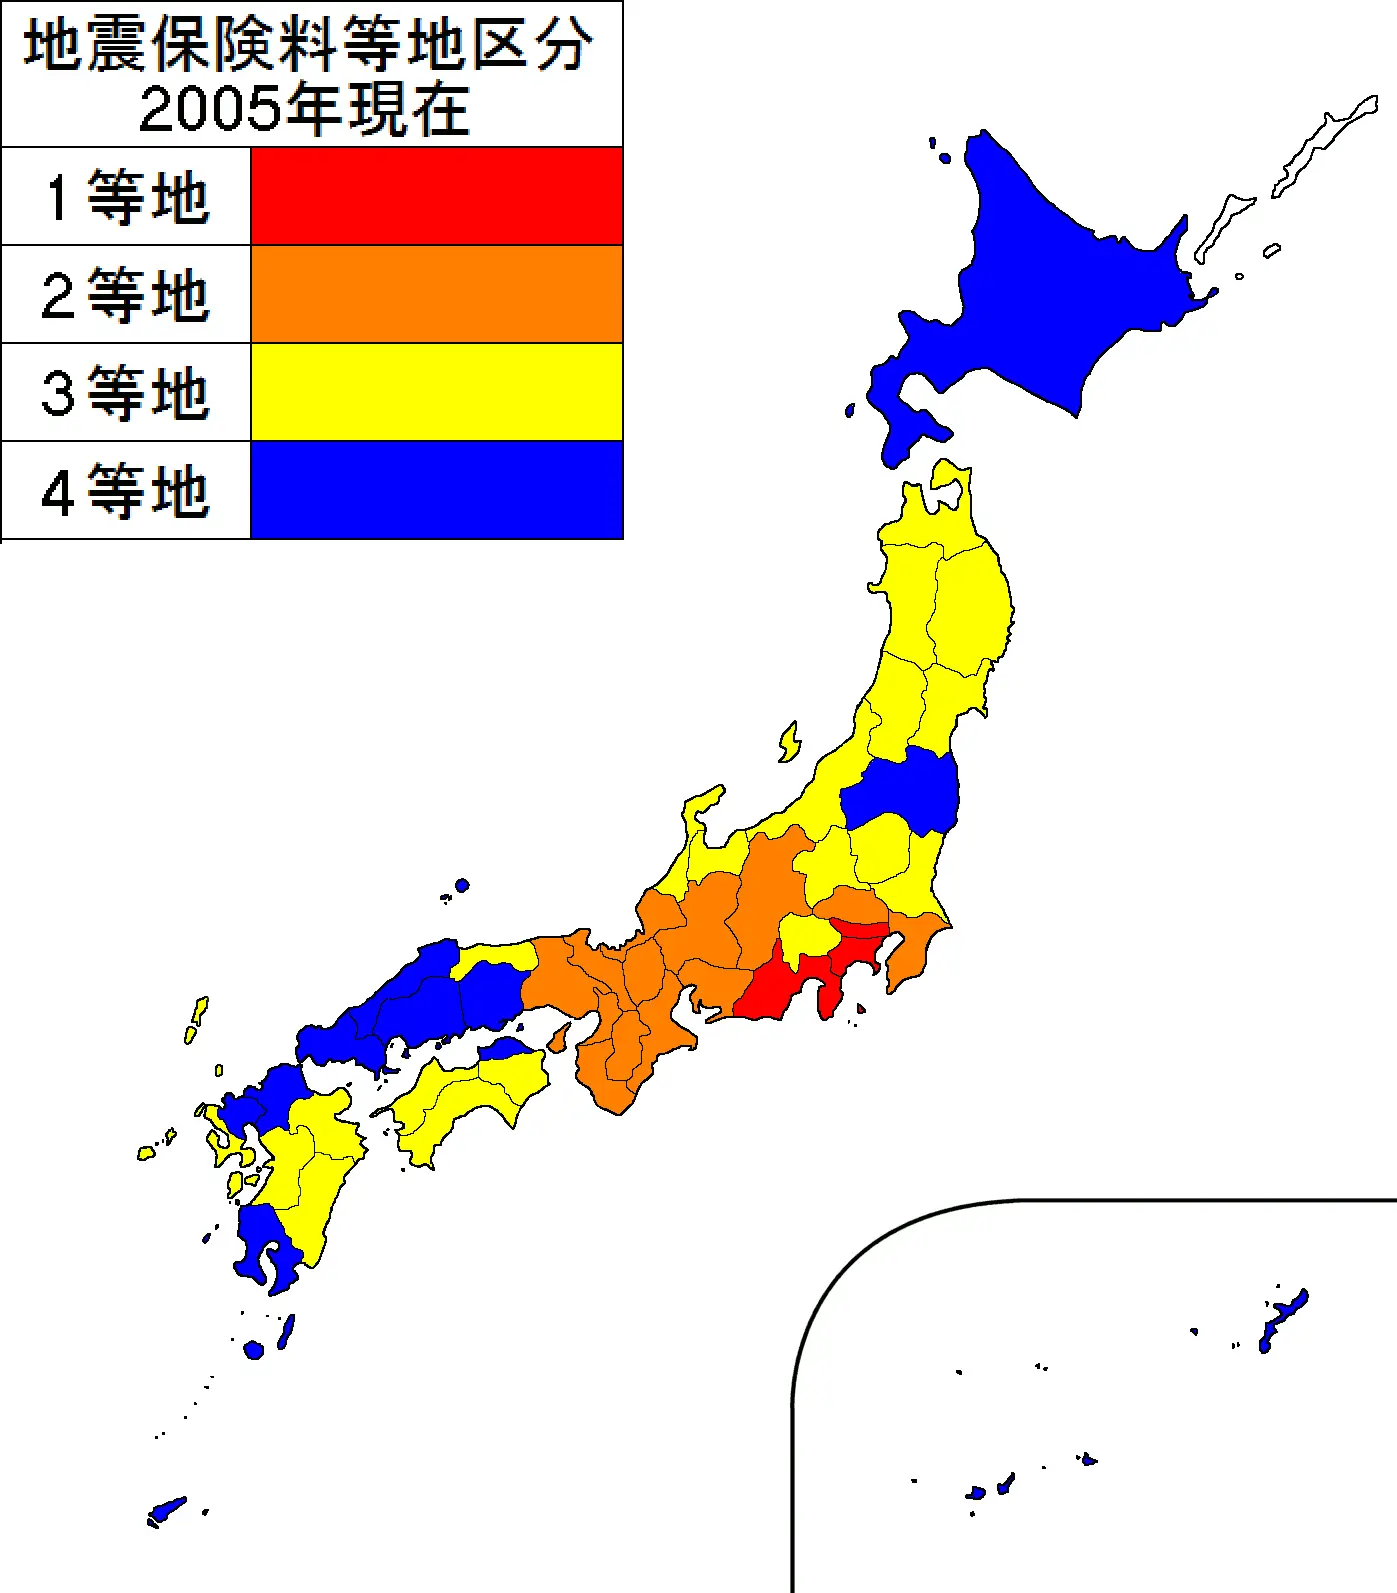 Earthquake Insurance Consultation of Japan 2005